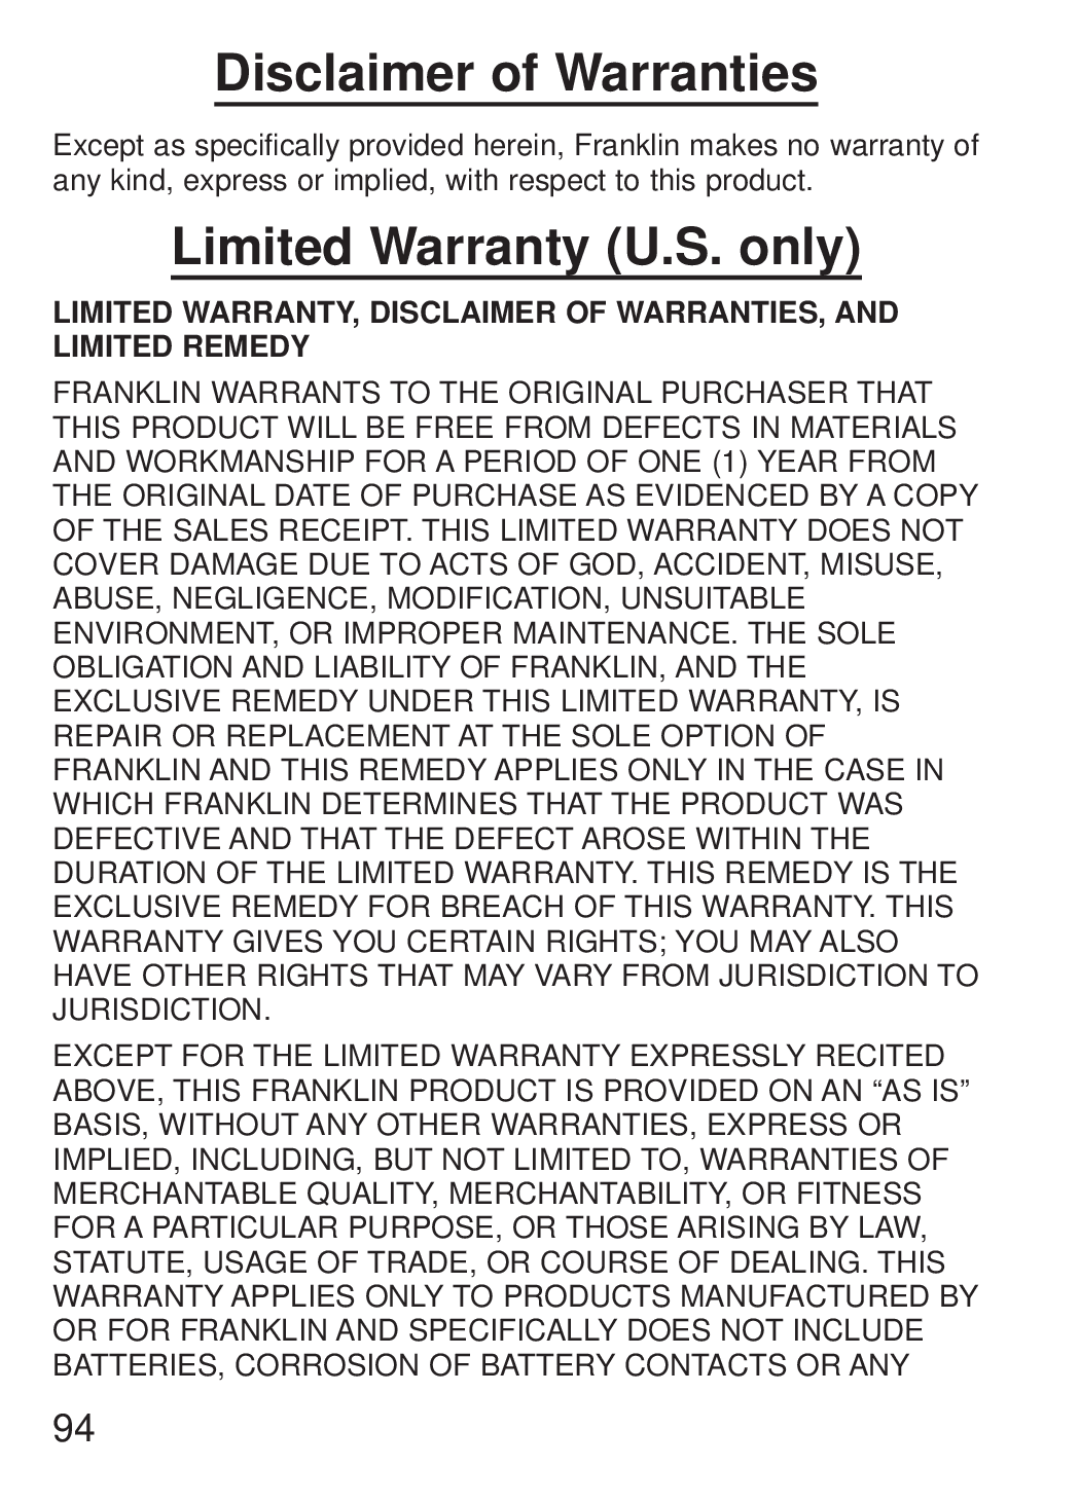 Franklin FQS-1870 manual Disclaimer of Warranties, Limited Warranty U.S. only 